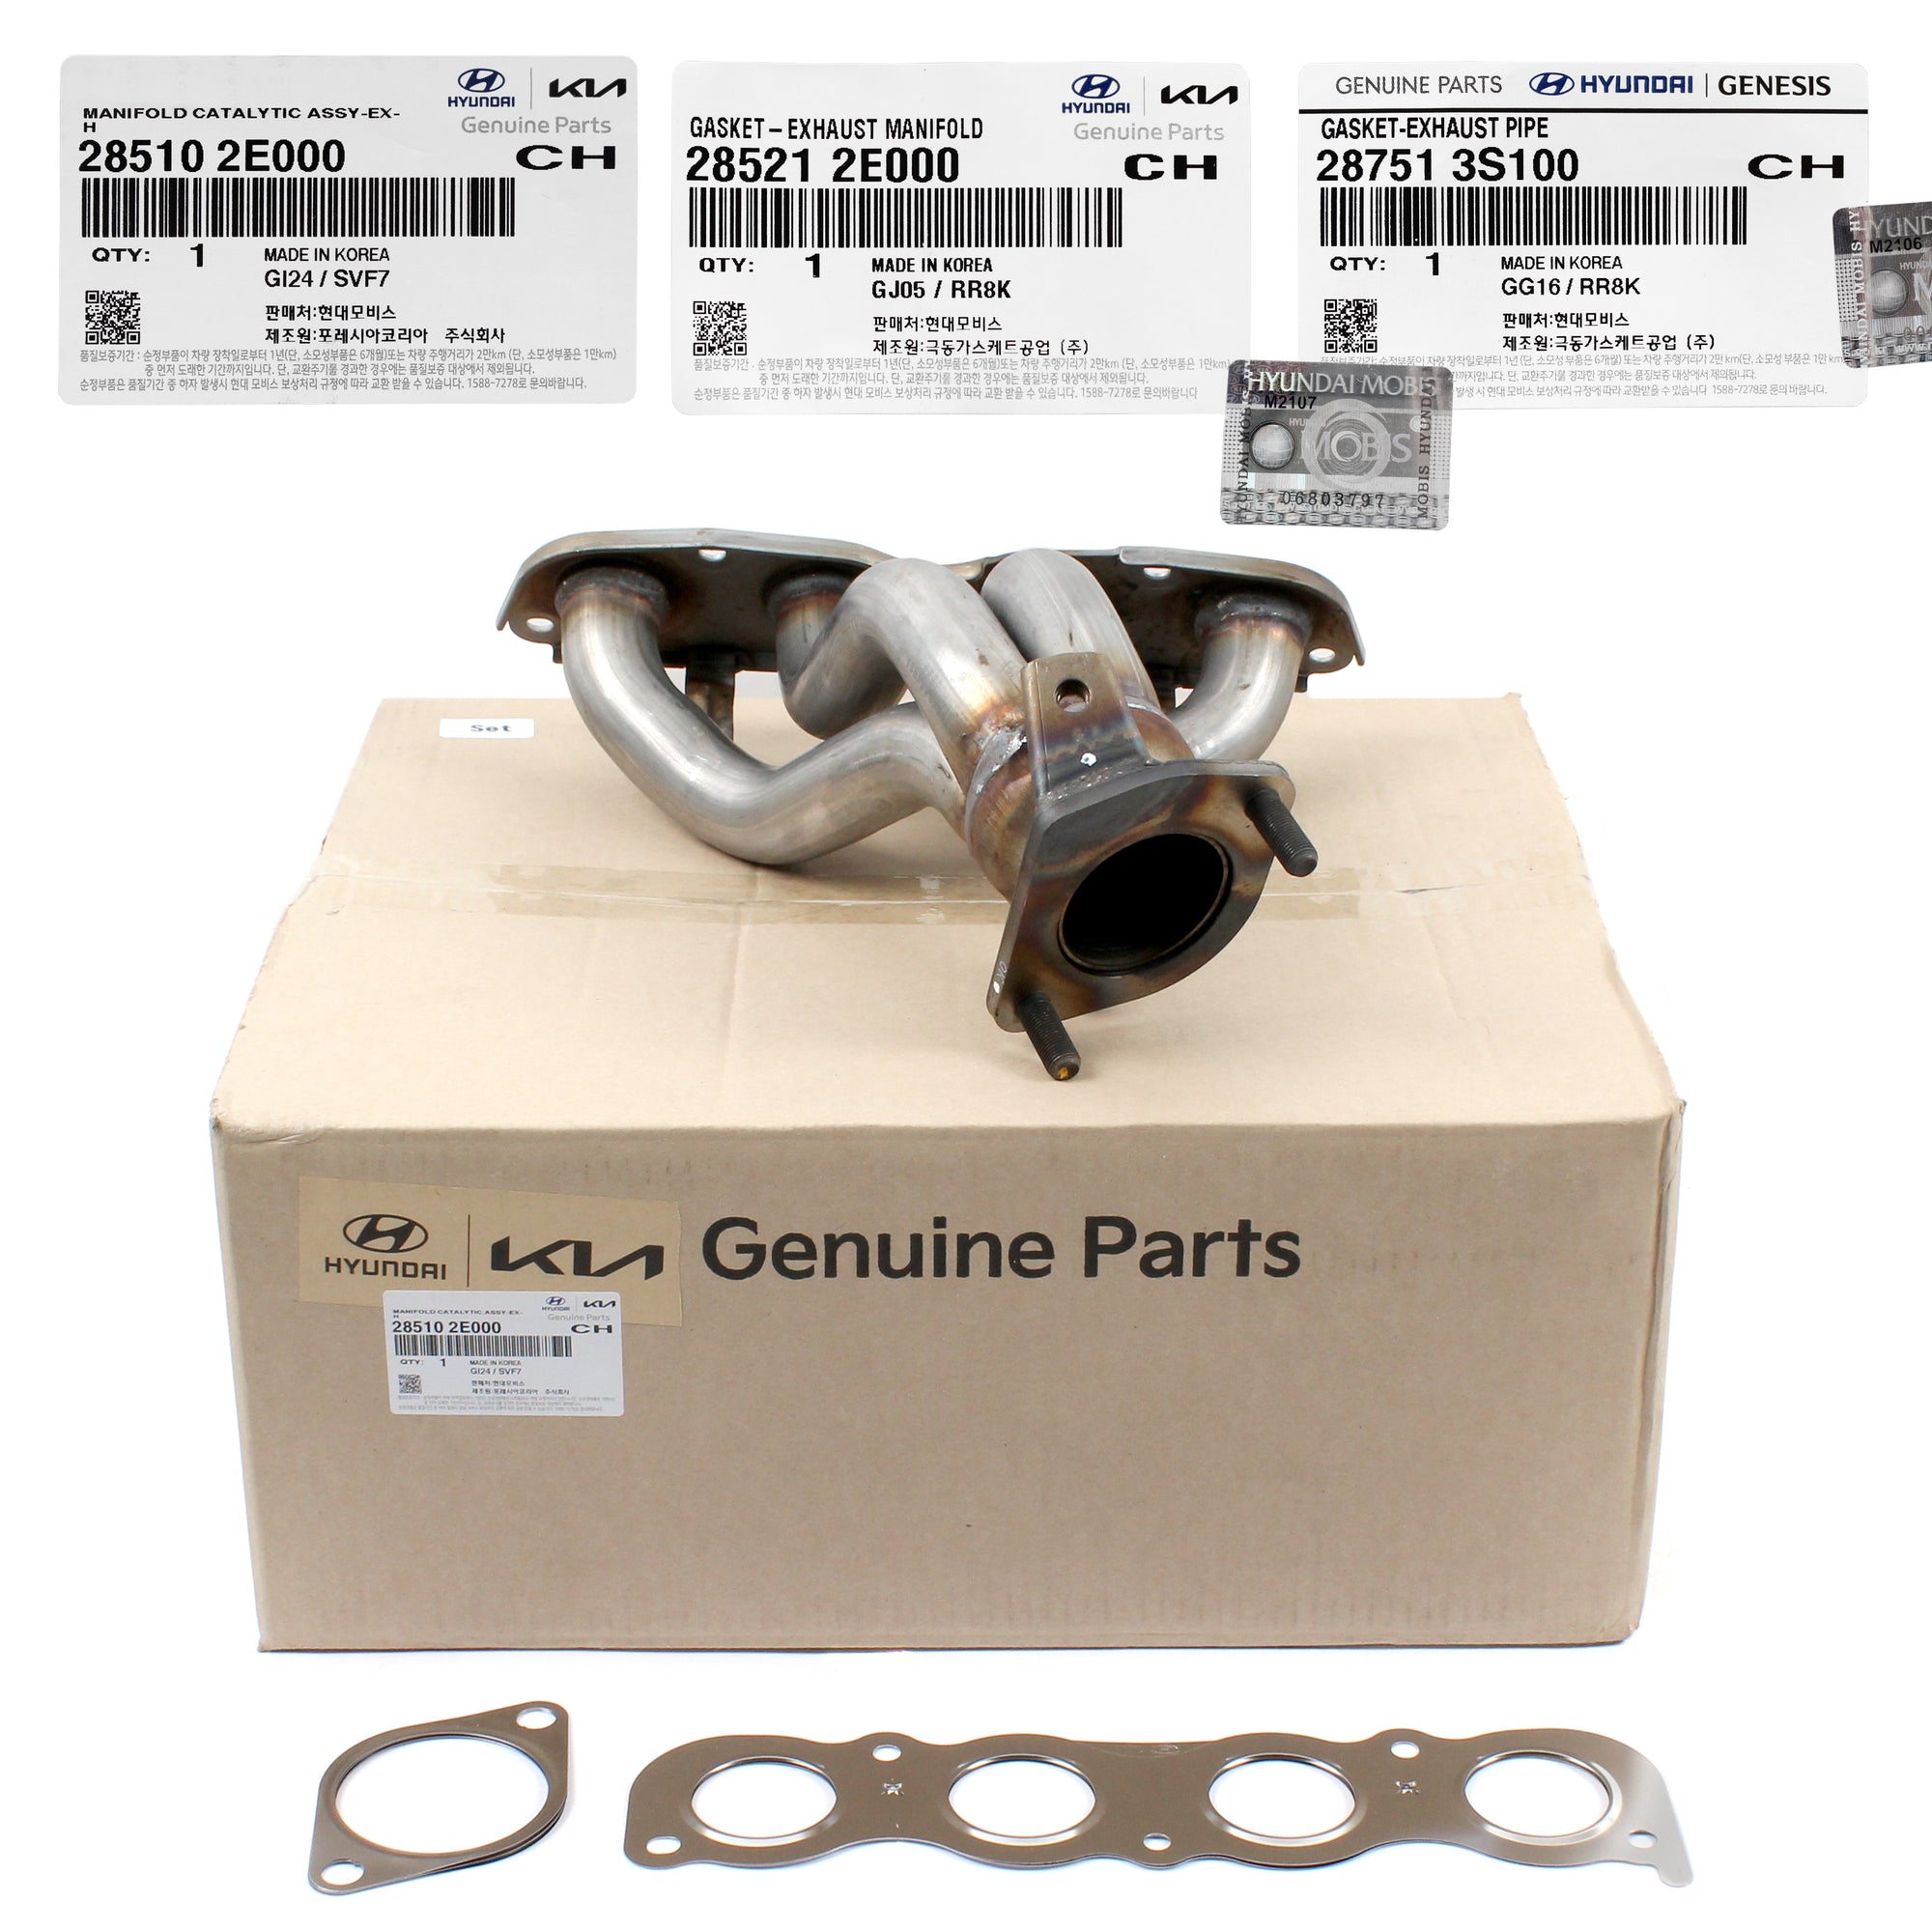 GENUINE Exhaust Manifold & Gaskets for 11-19 Hyundai Elantra Tucson 285102E000